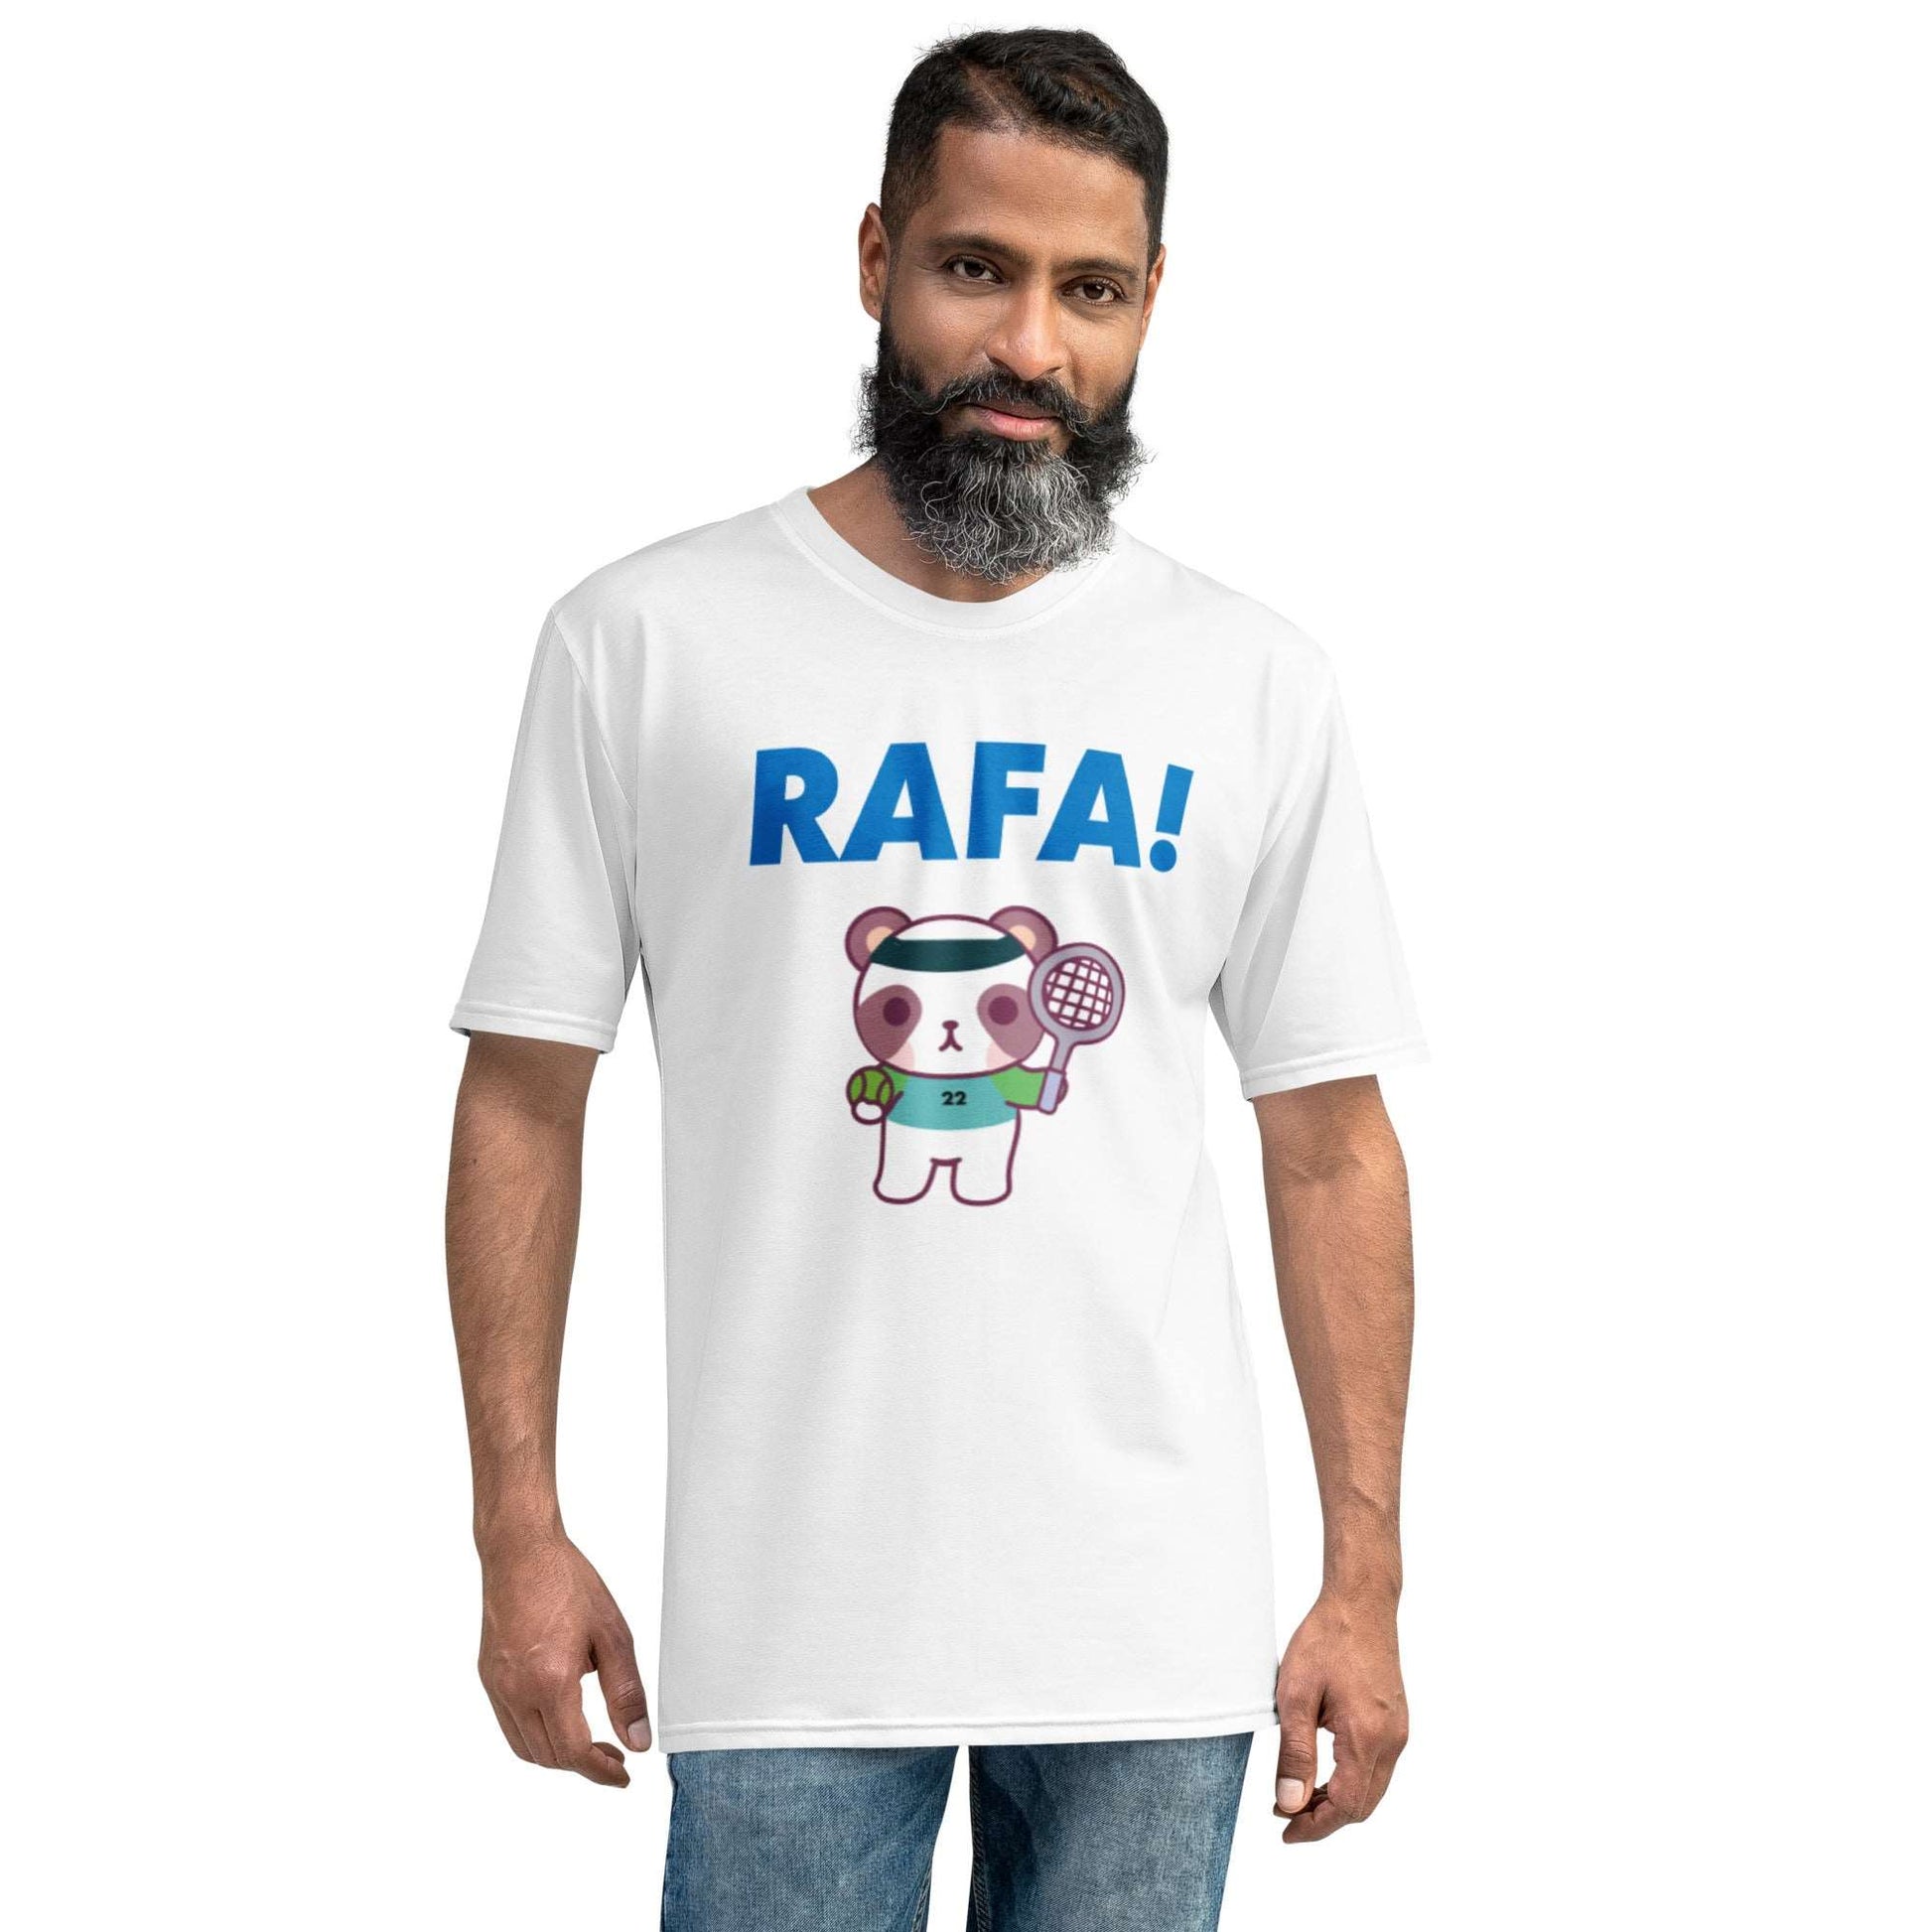 Men's Rafa 22 Athletic Performance T-shirt - TOKKITENNIS